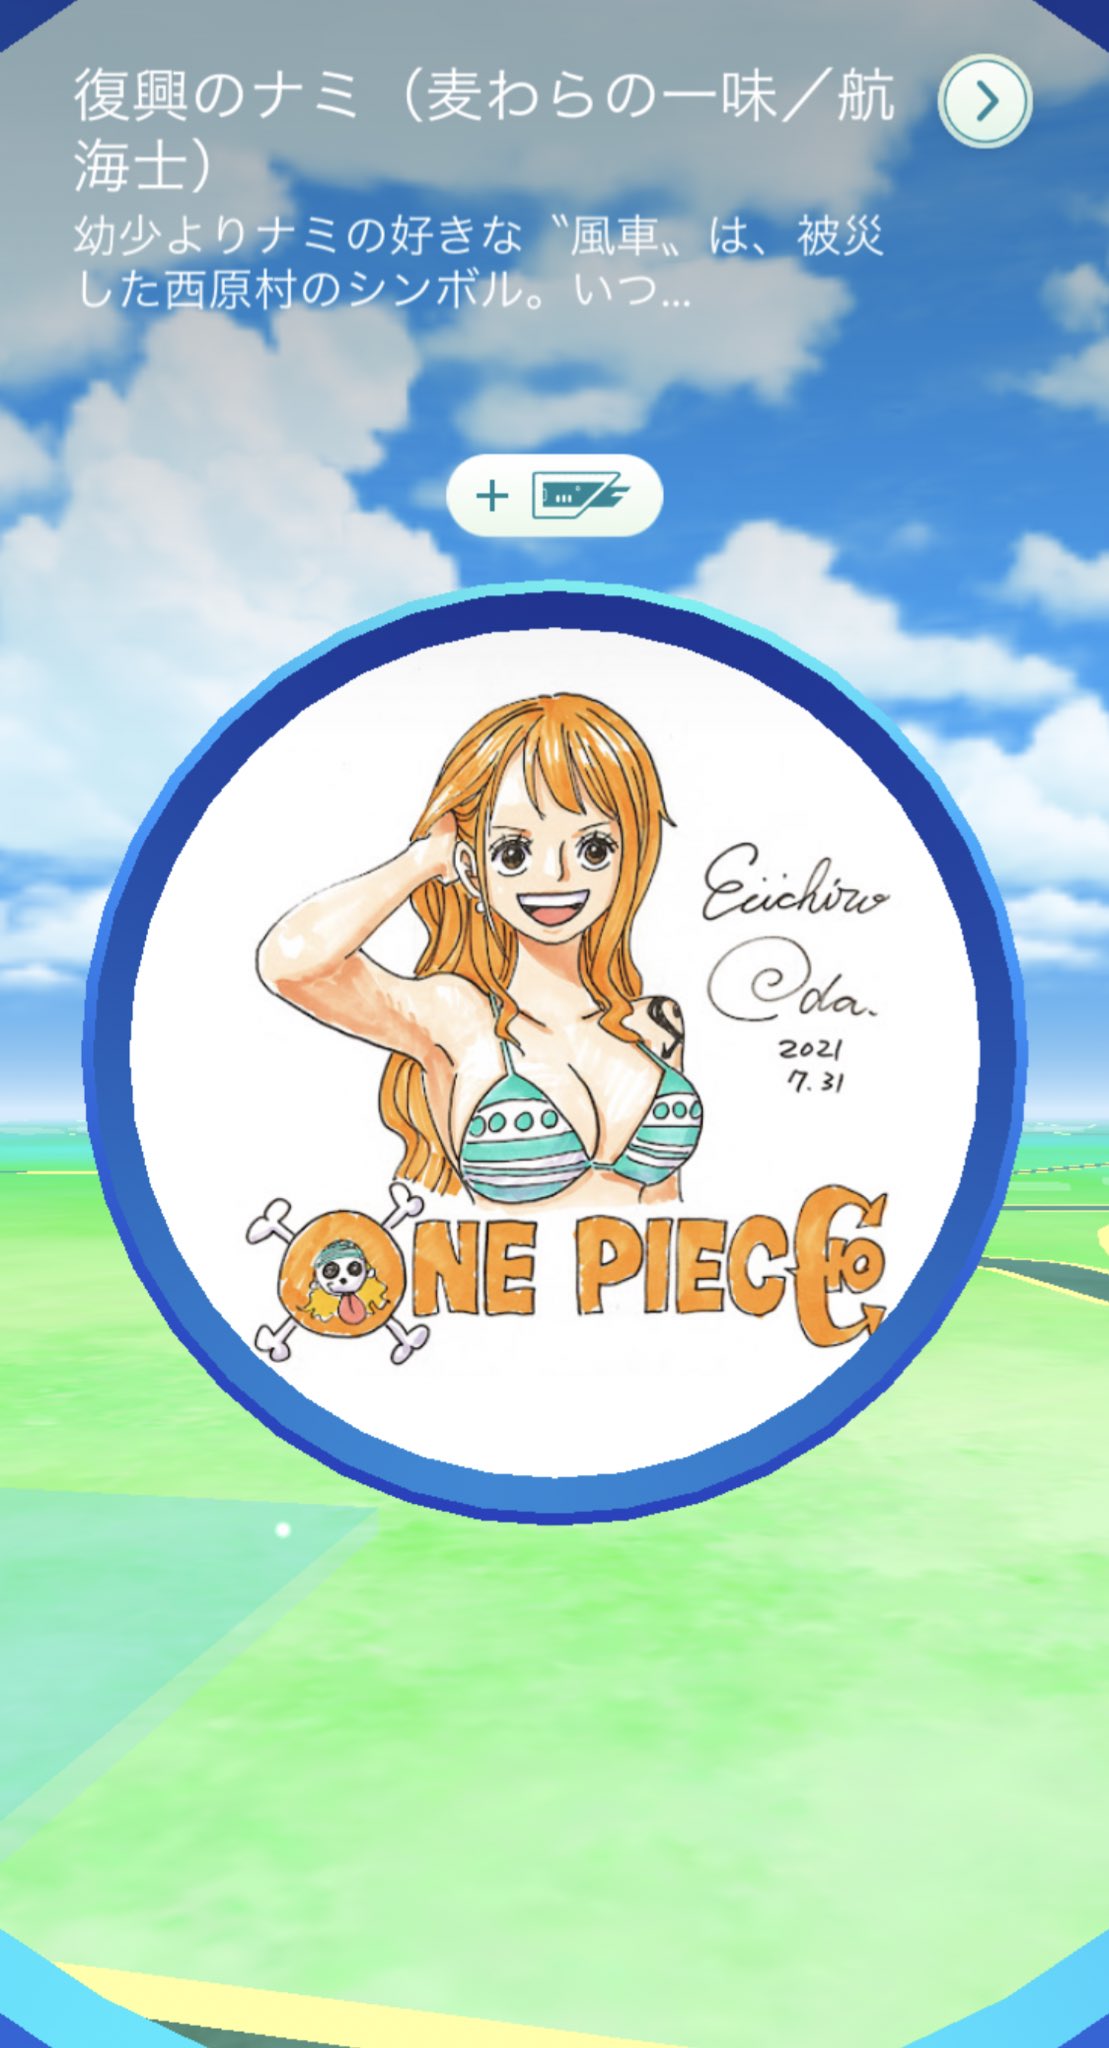 One Piece スタッフ 公式 Official ナミ像には ポケモンgo のポケストップが設置され 贈呈された色紙が掲示されています ナミ像 熊本復興 Onepiece Pokemongo T Co Z5hikdqwgd Twitter